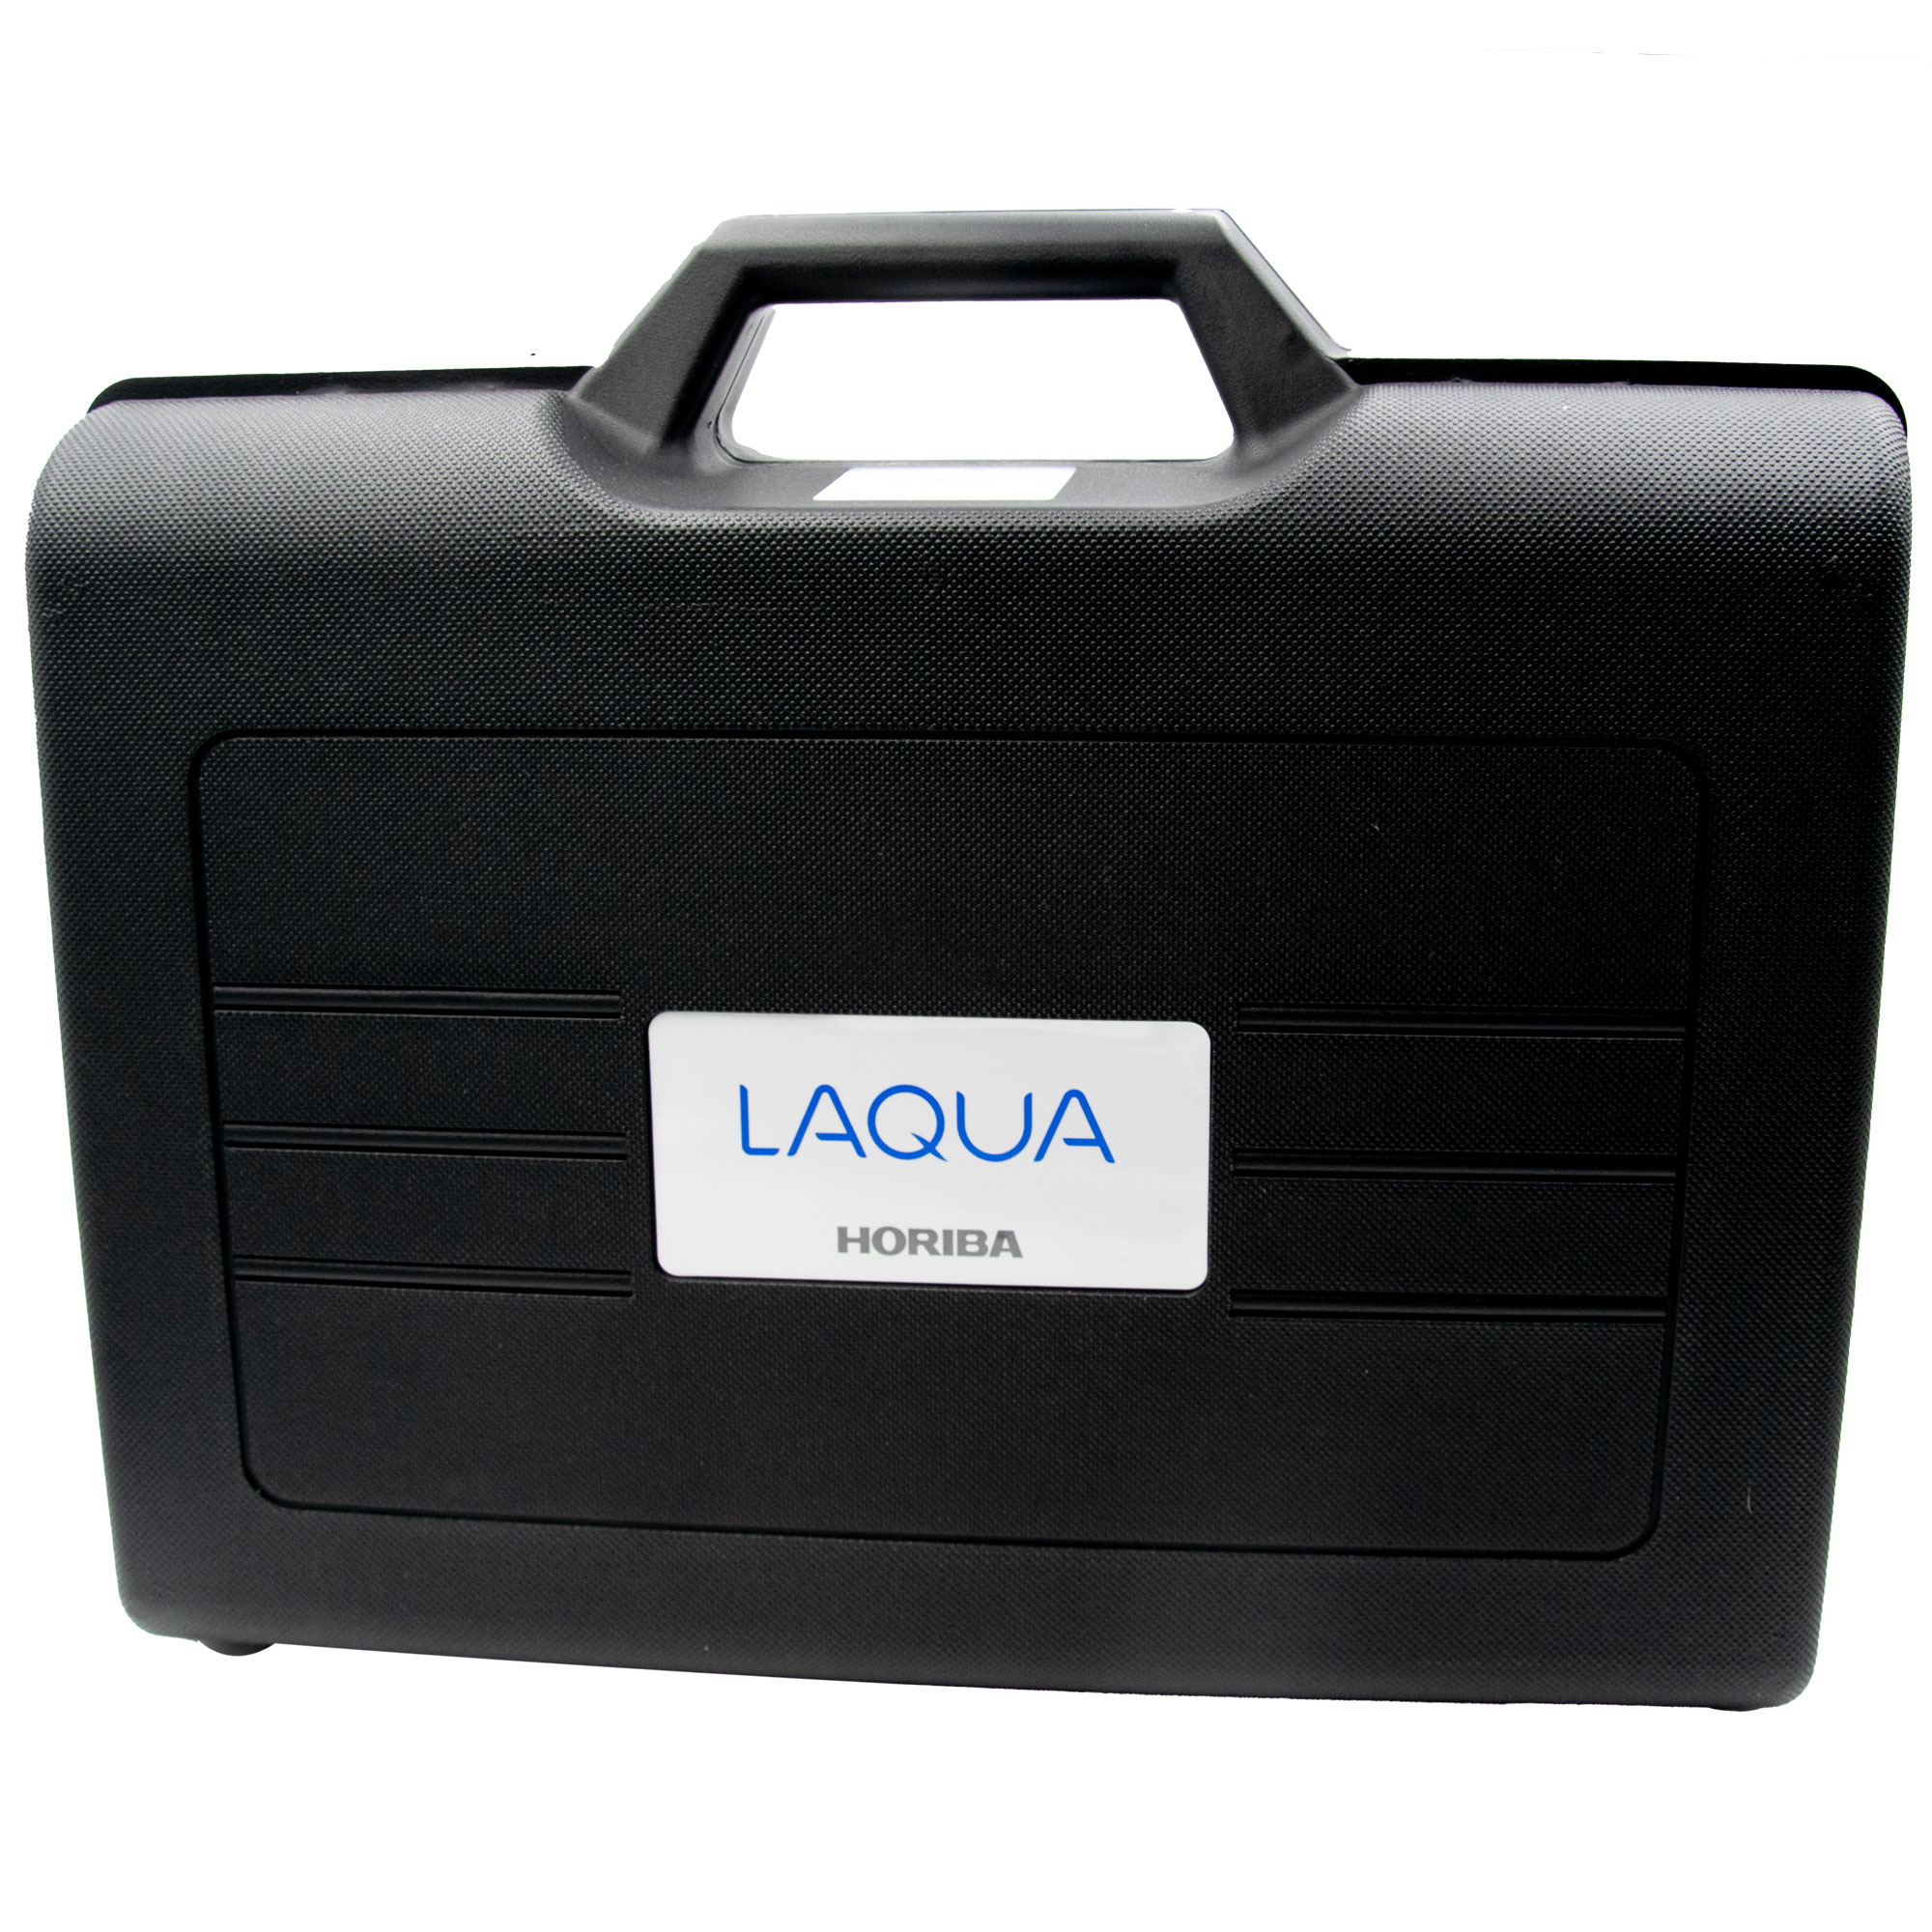 Horiba LAQUA PC210-Kit pH, ORP, conductivity, TDS, salt, resistance and temperature handheld meter in analysis case